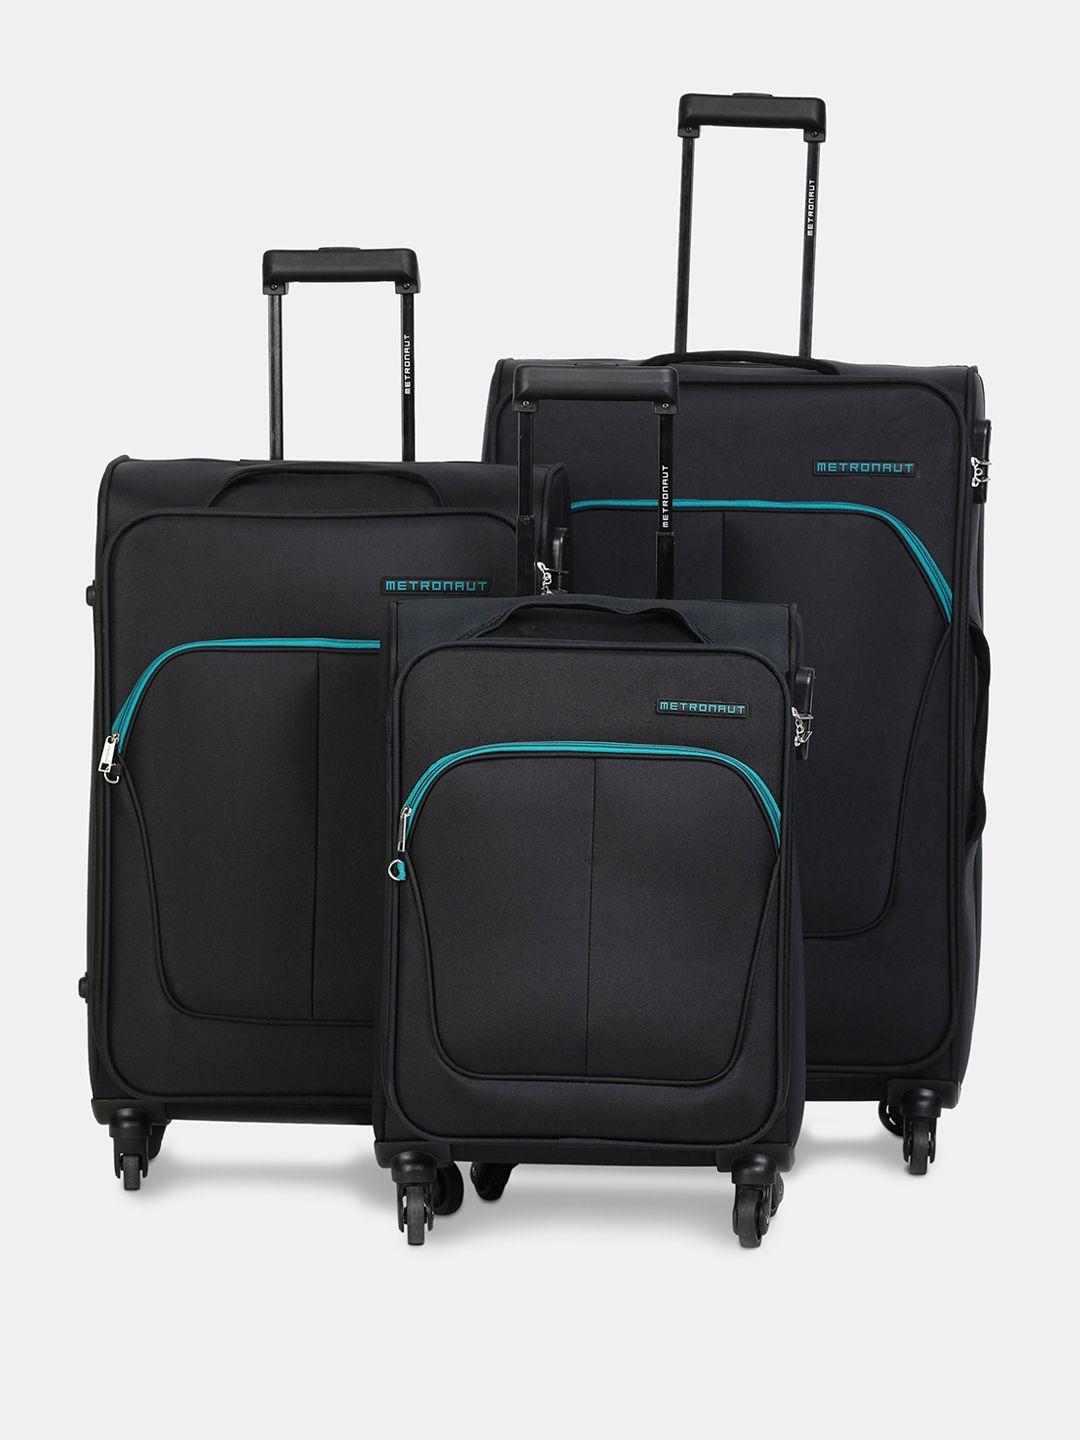 metronaut set of 3 soft trolley suitcases - cabin, medium & large